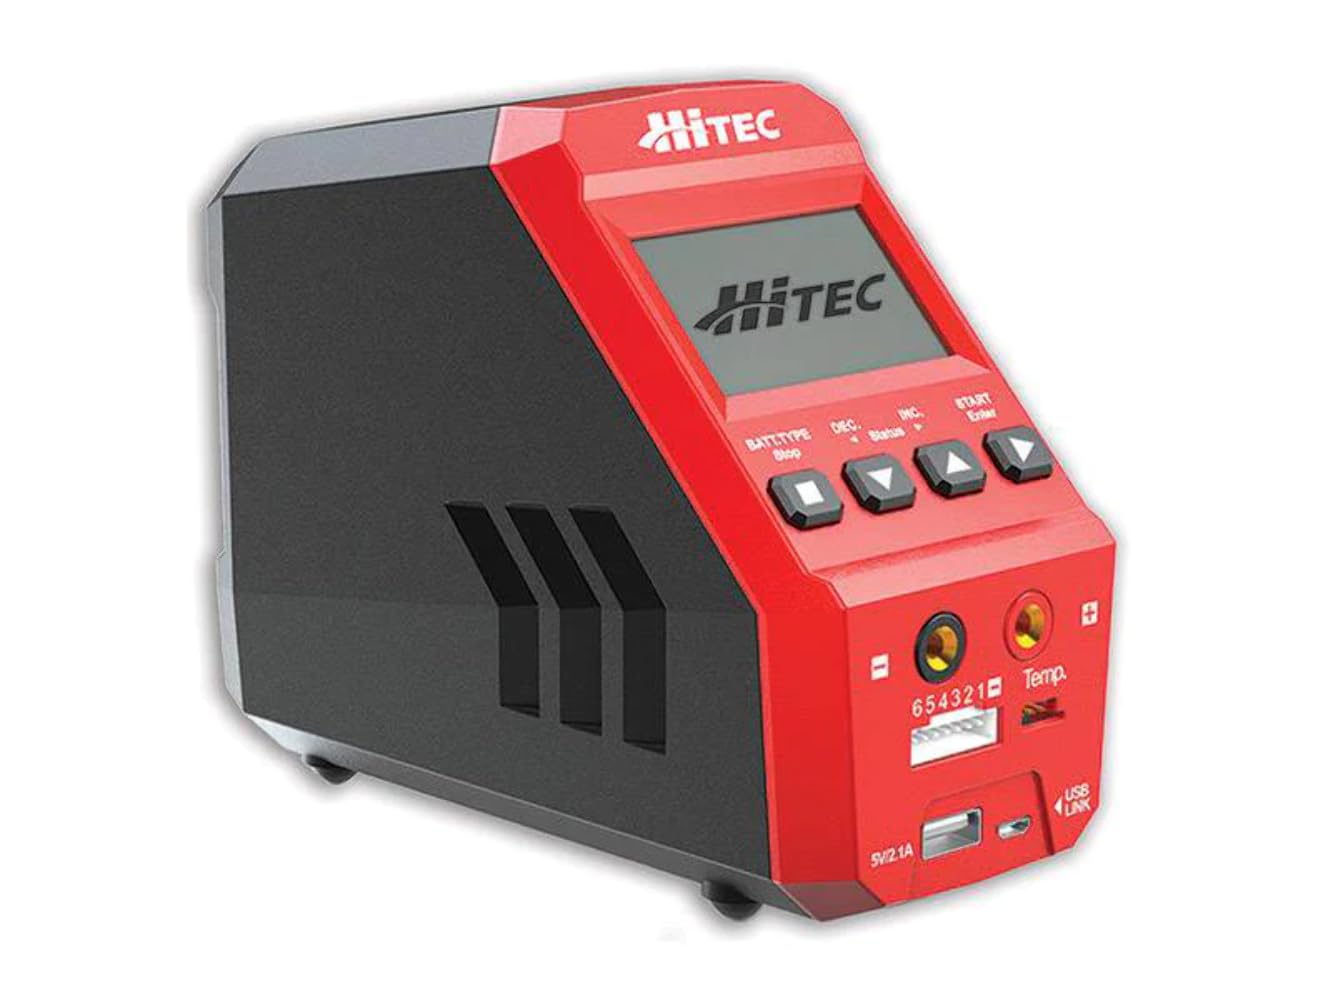 Hitec RCD Hitech RCD 44245 RDX1 AC/DC Battery Charger/Discharger